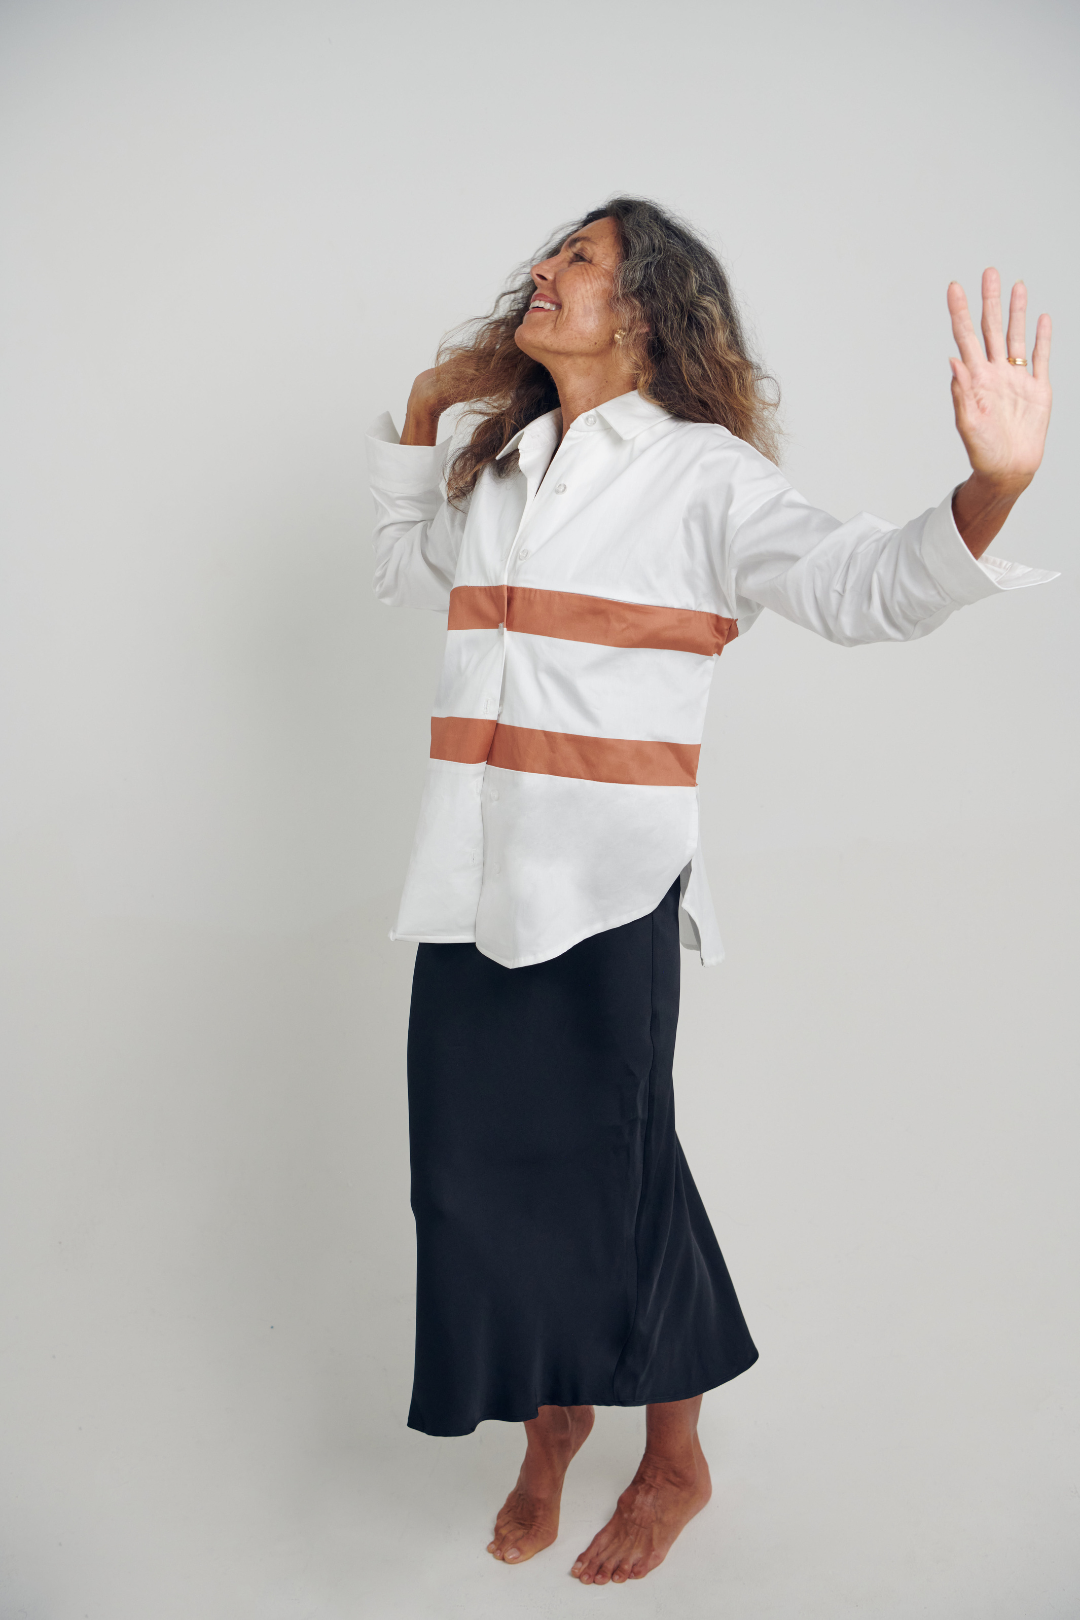 The Maria Anna Shirt: Italian Inspired Rust Striped